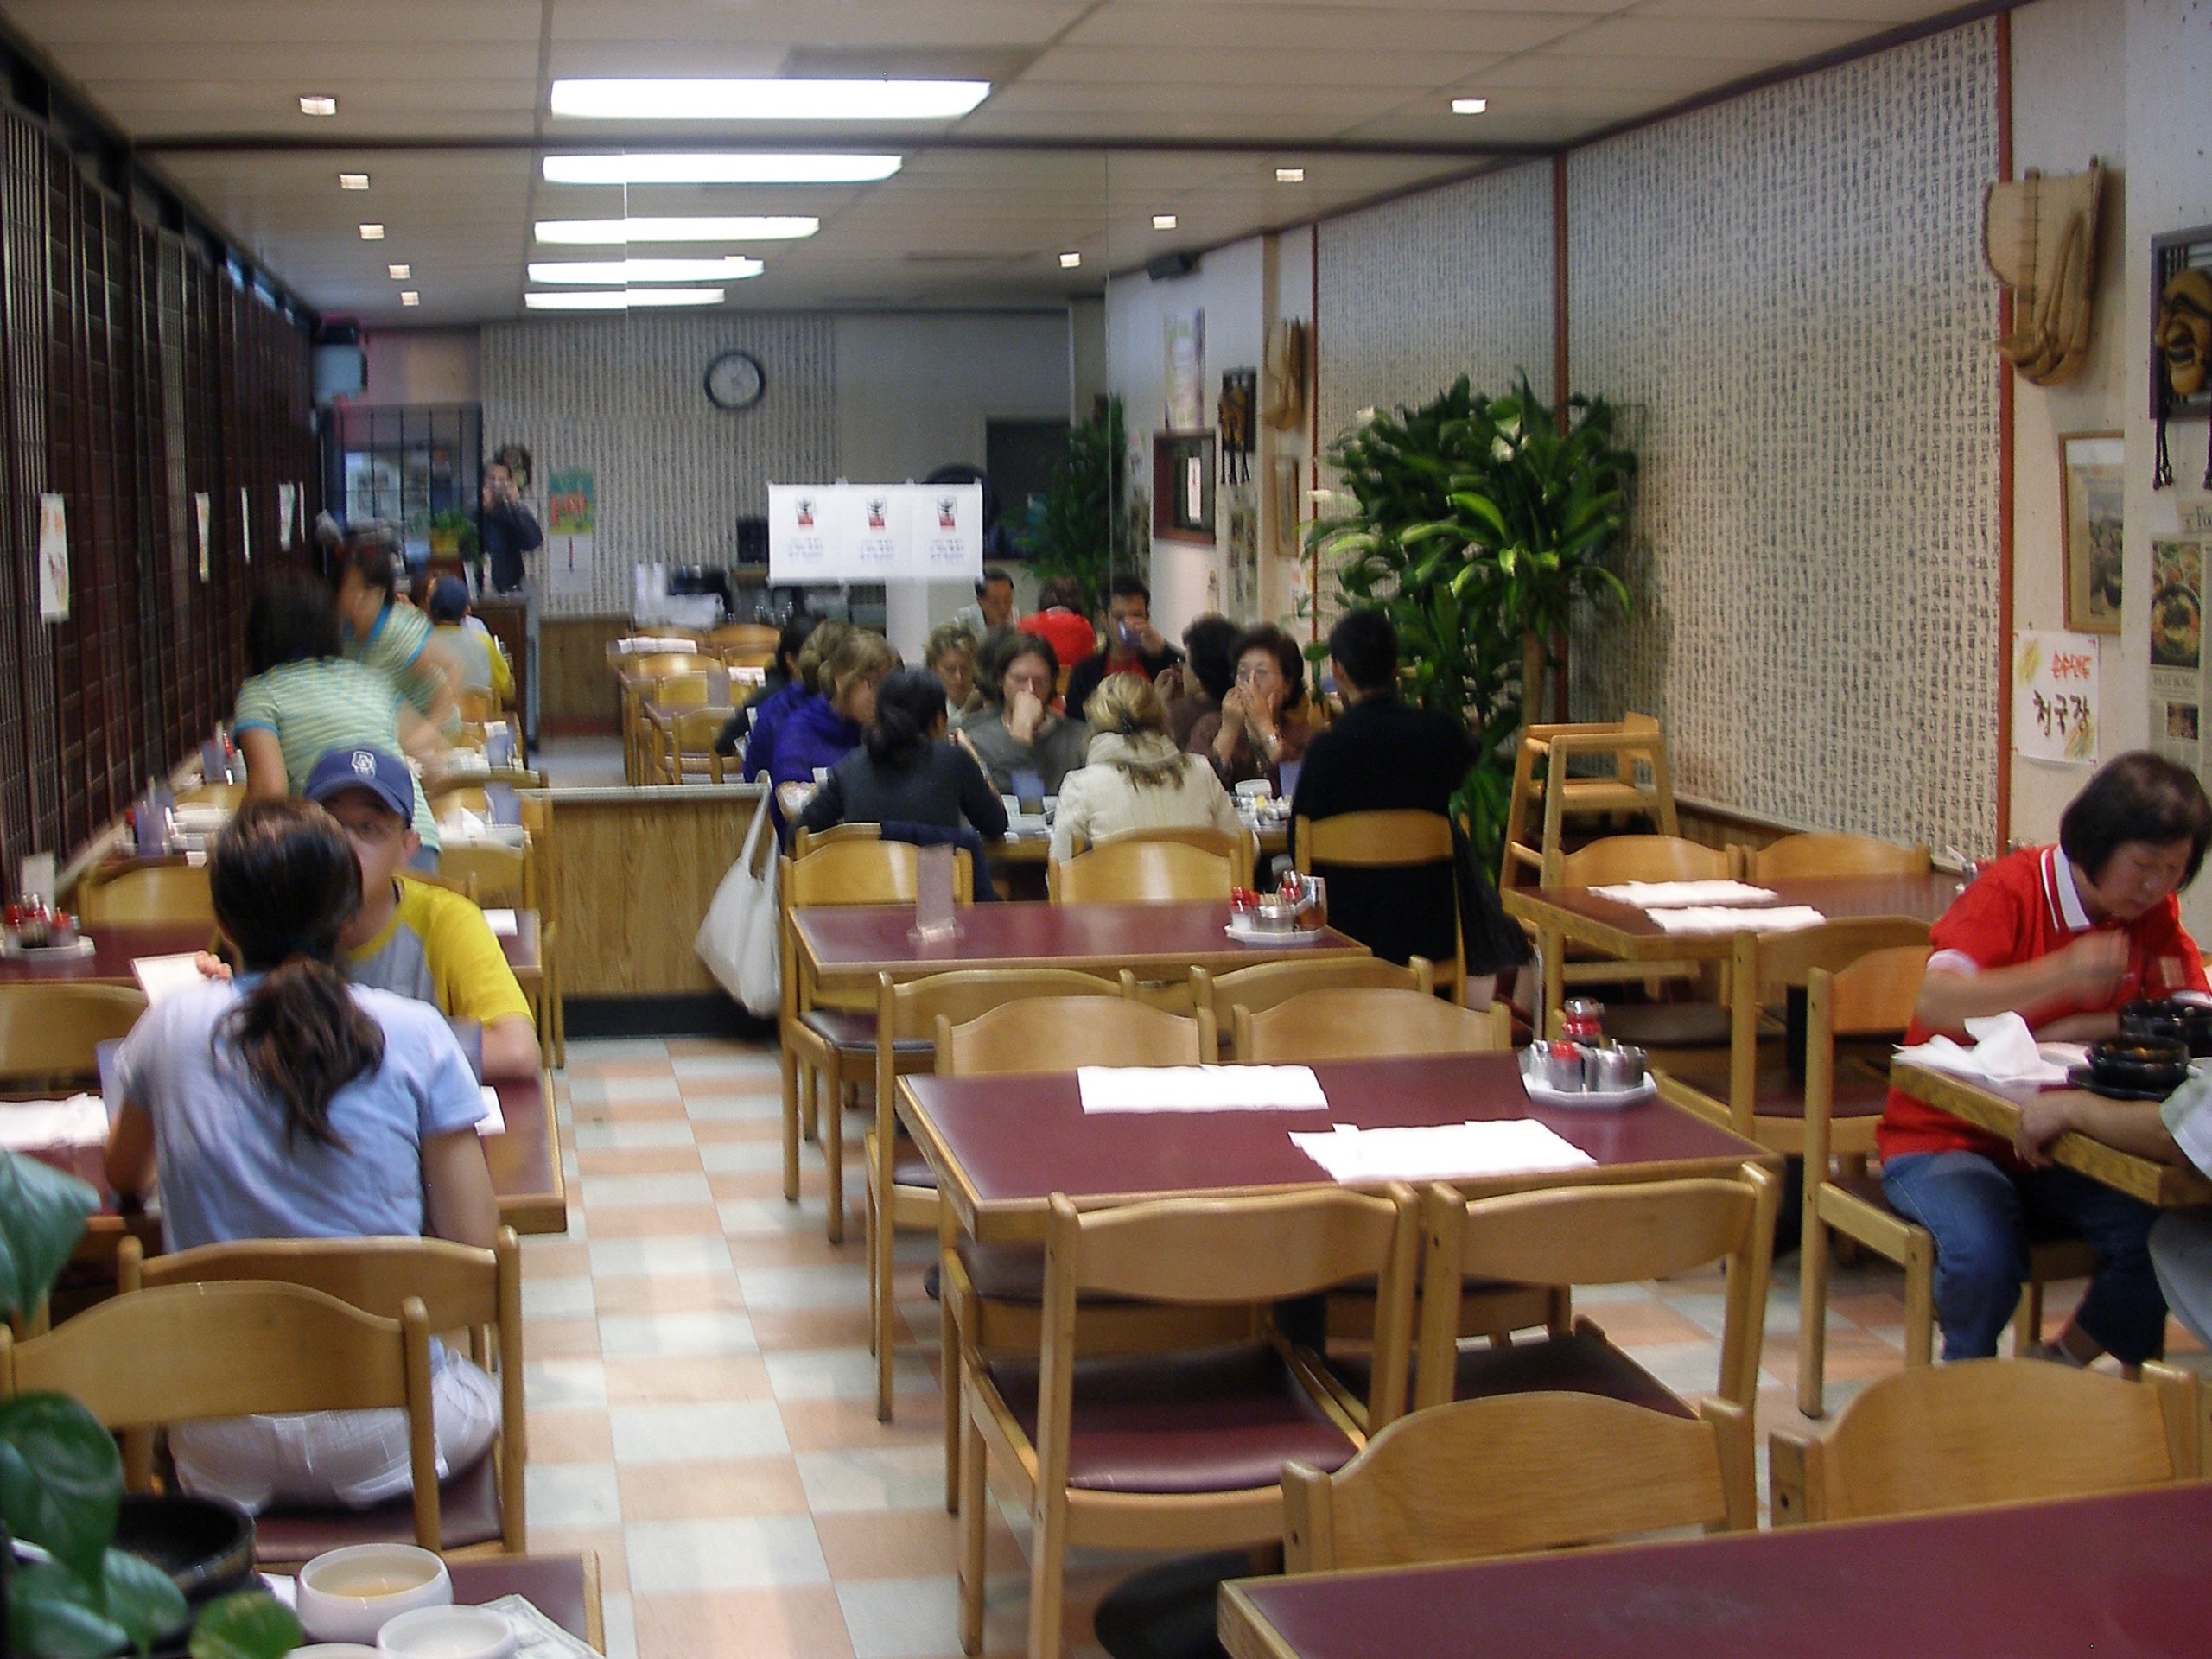 Korean Restaurant Los Angeles